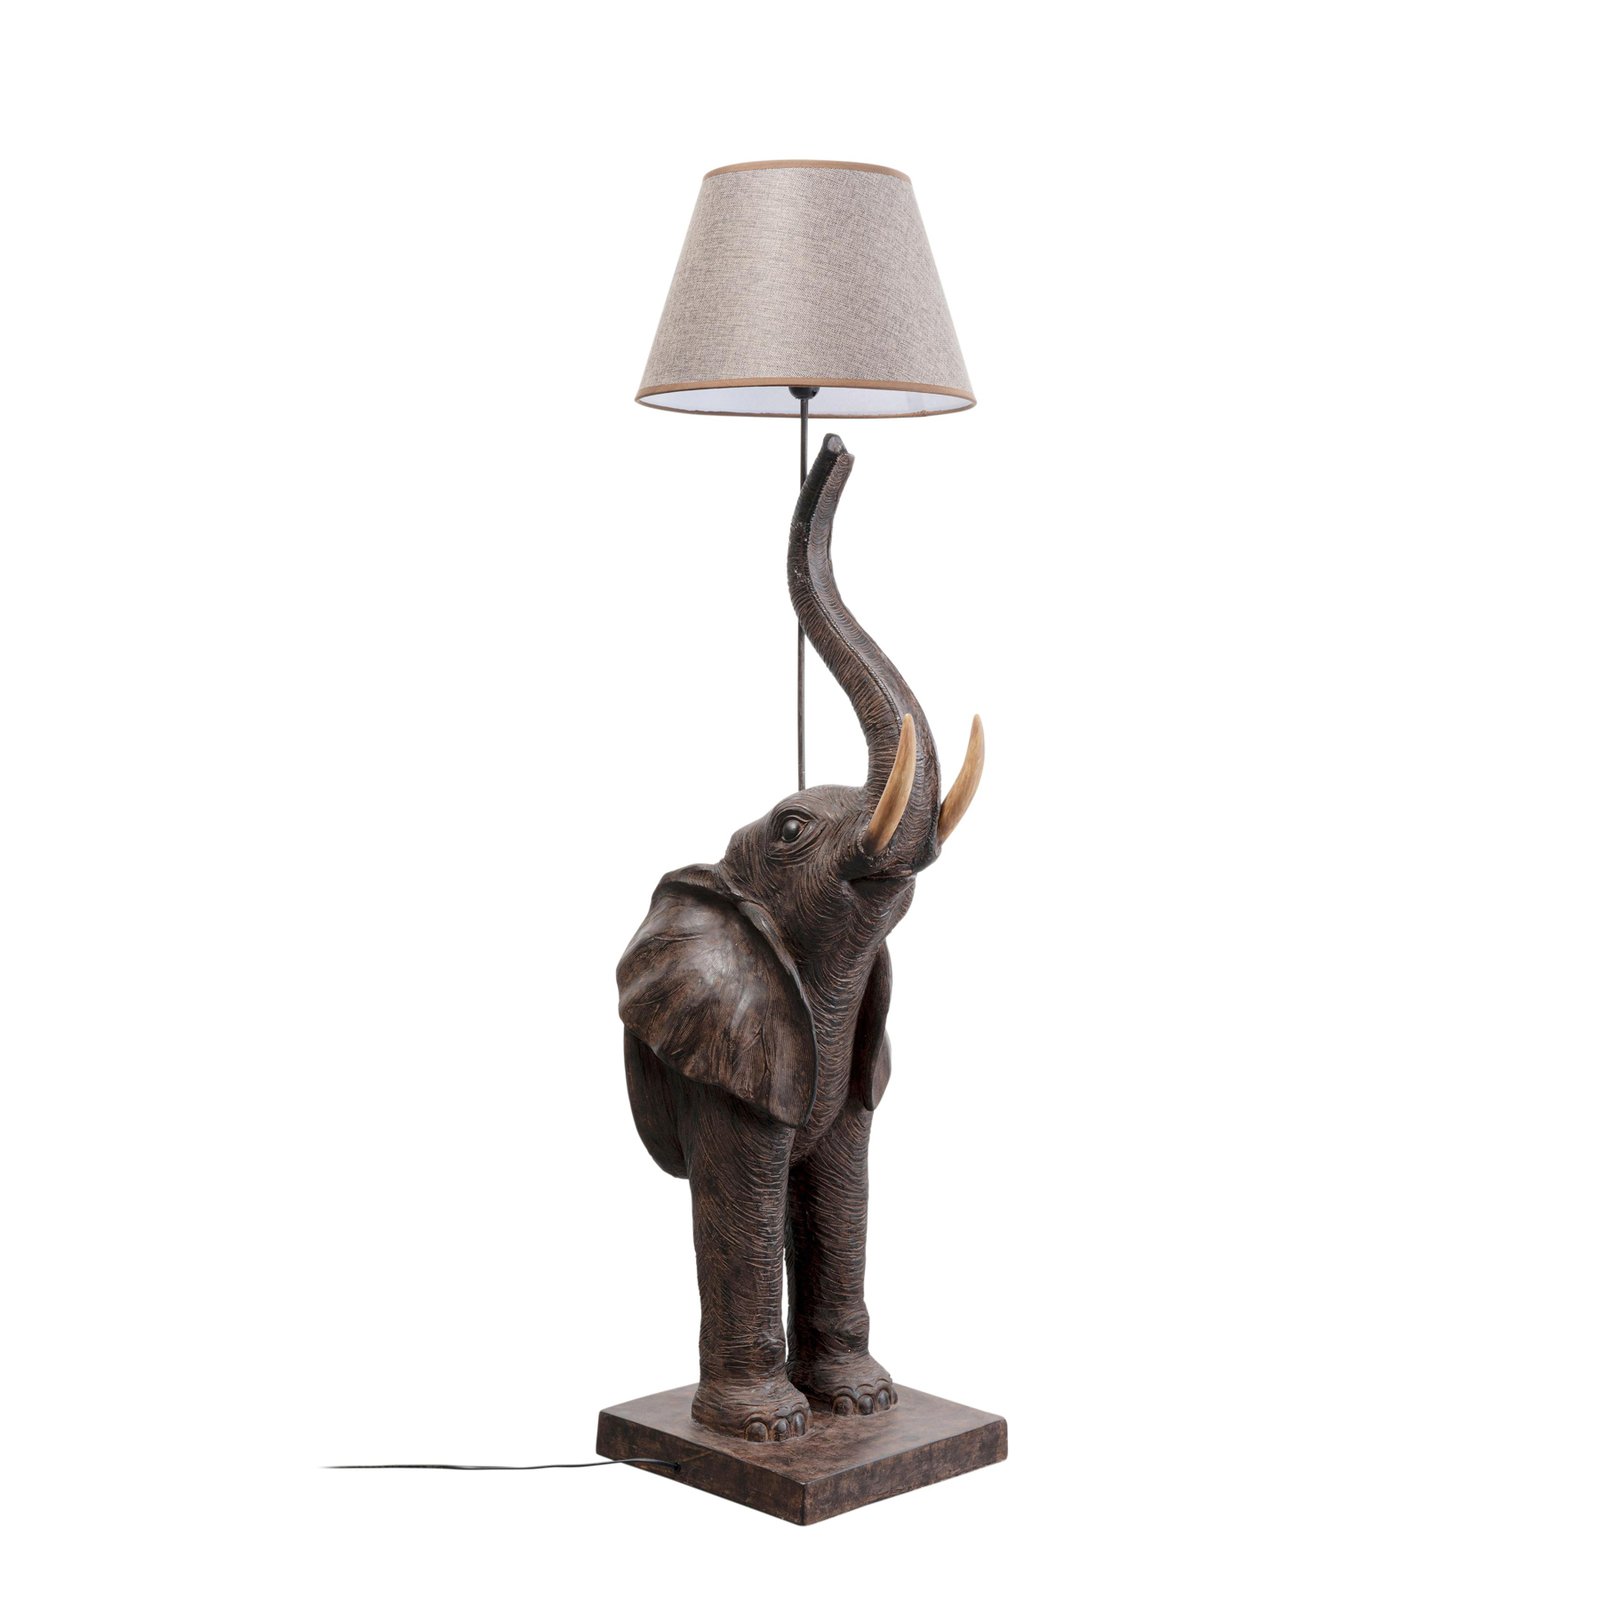 KARE Stehlampe Animal Elephant, braun, Leinen natur, 154 cm